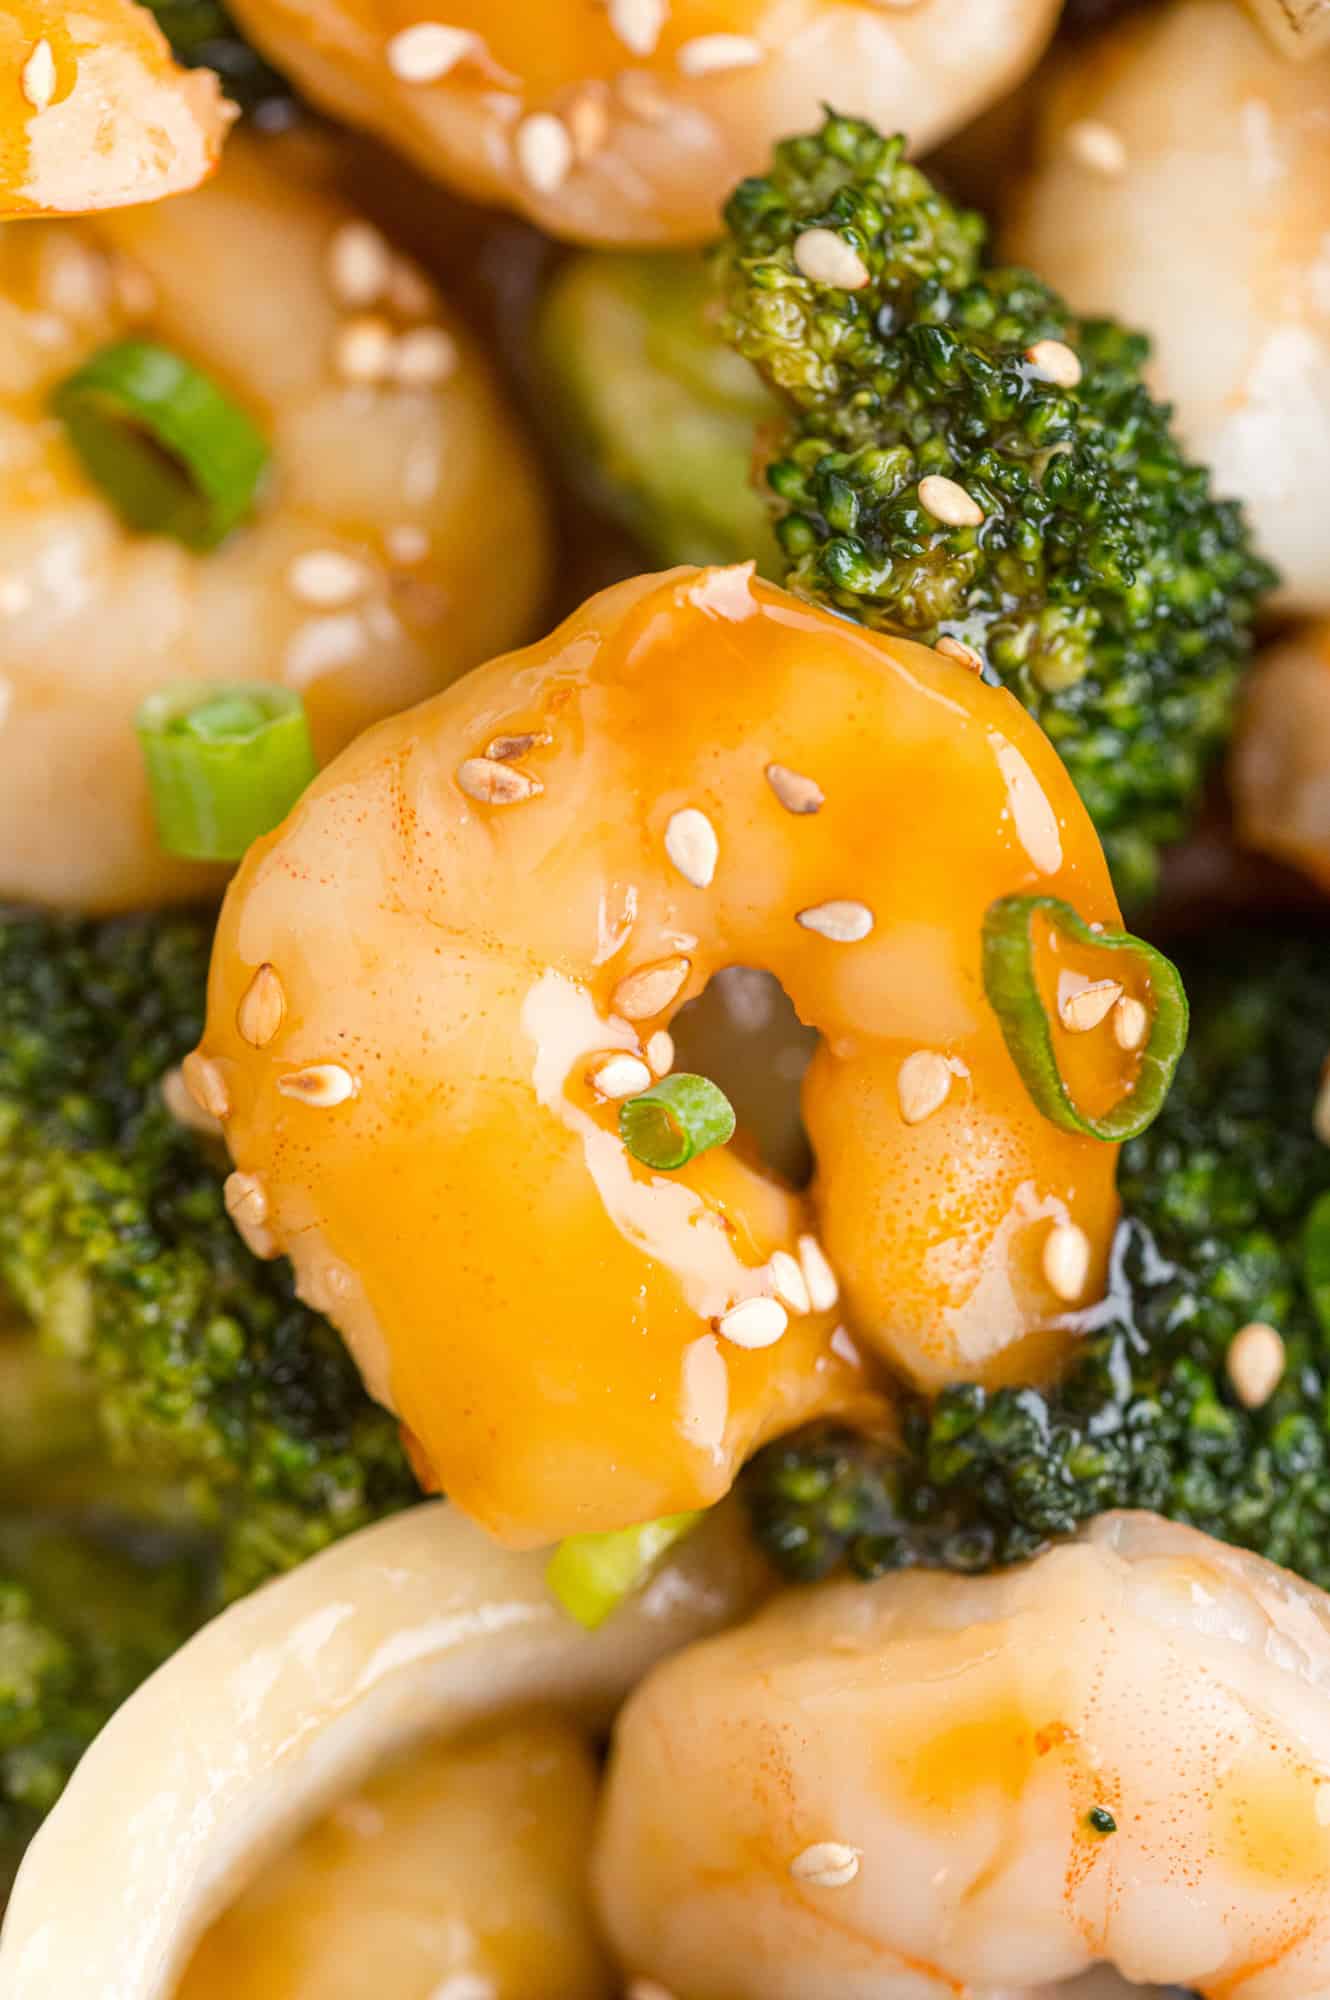 Shrimp with brown sauce and broccoli.